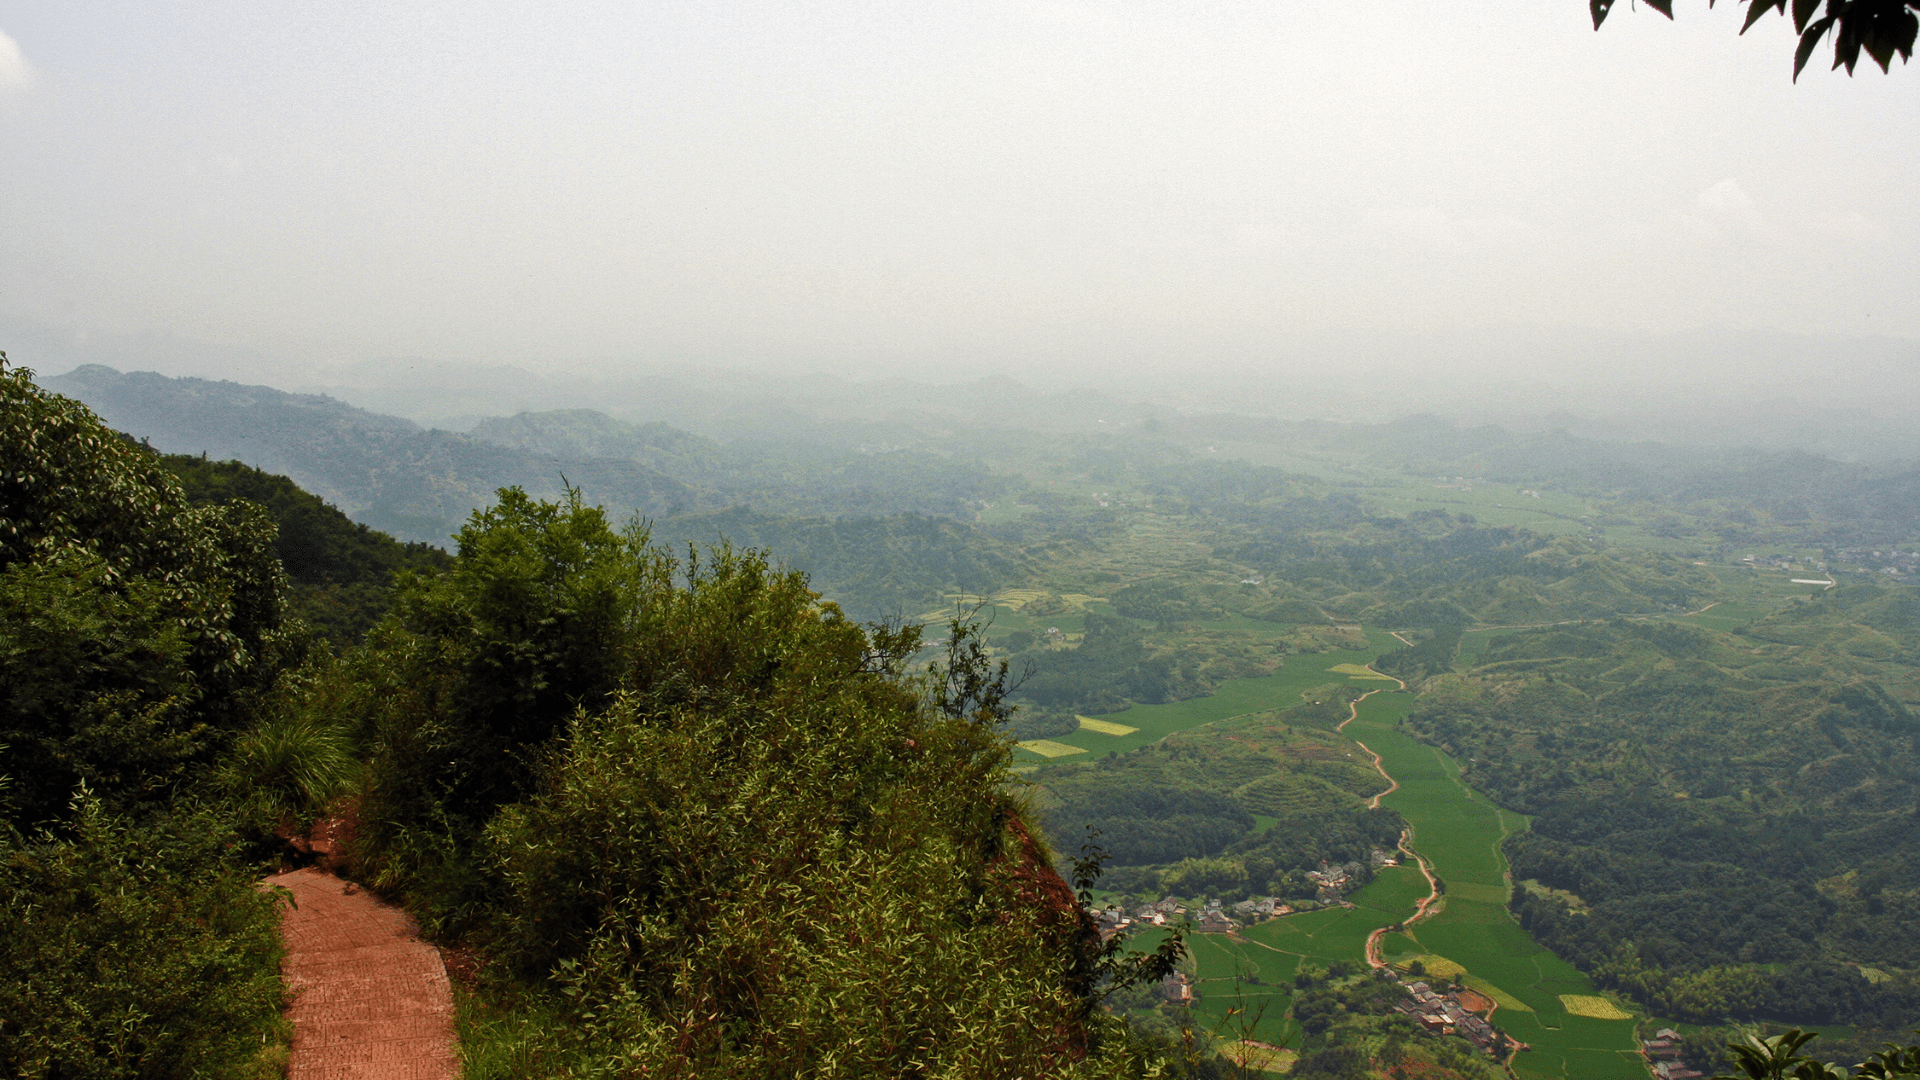 Mount Qiyun often has a cloud-shrouded scenery